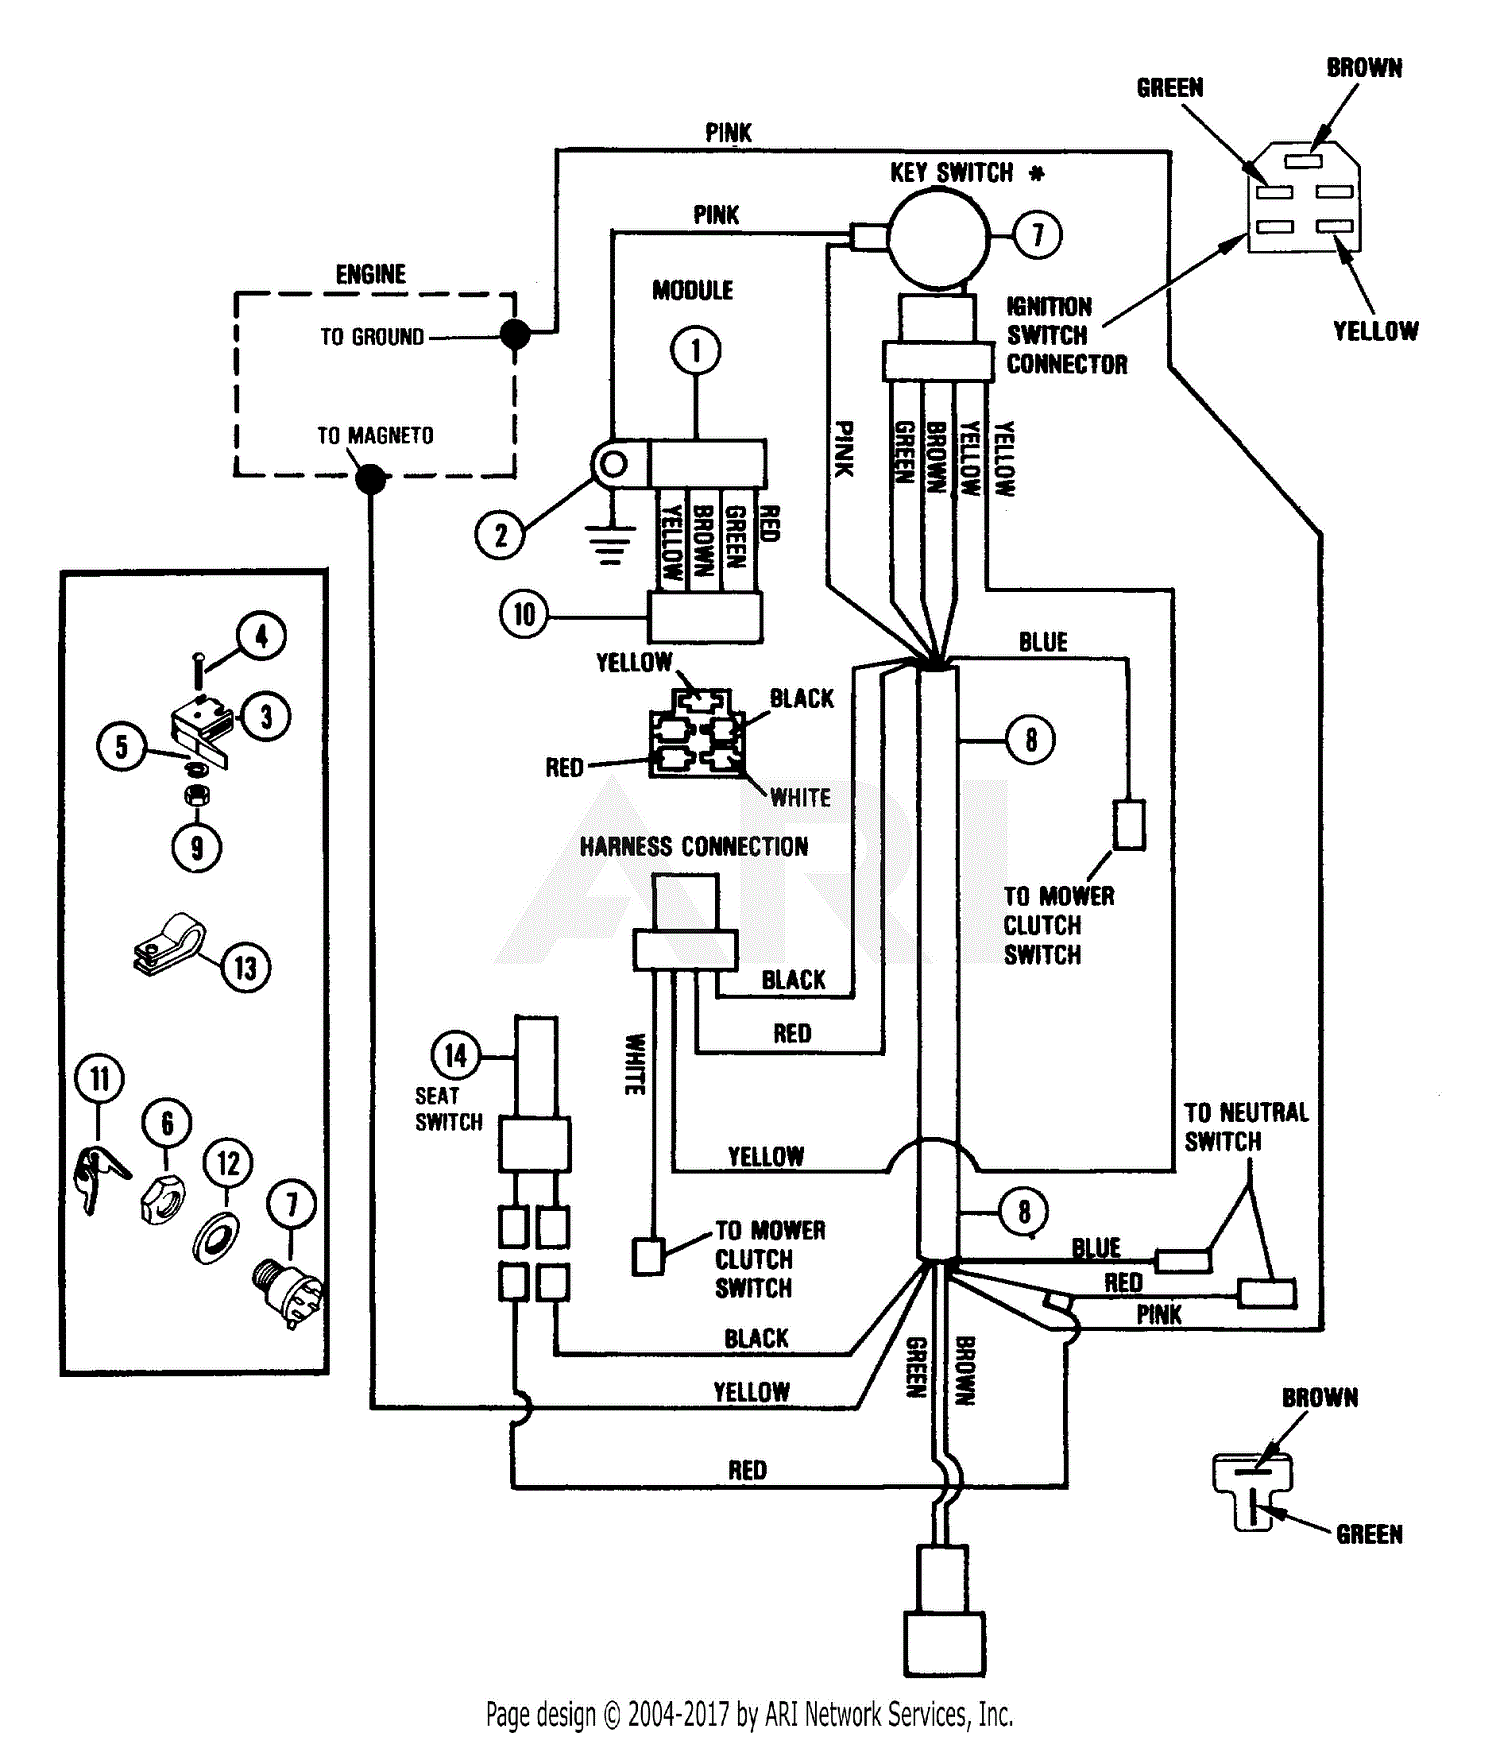 Wiring Diagram For Solenoid from schematron.org